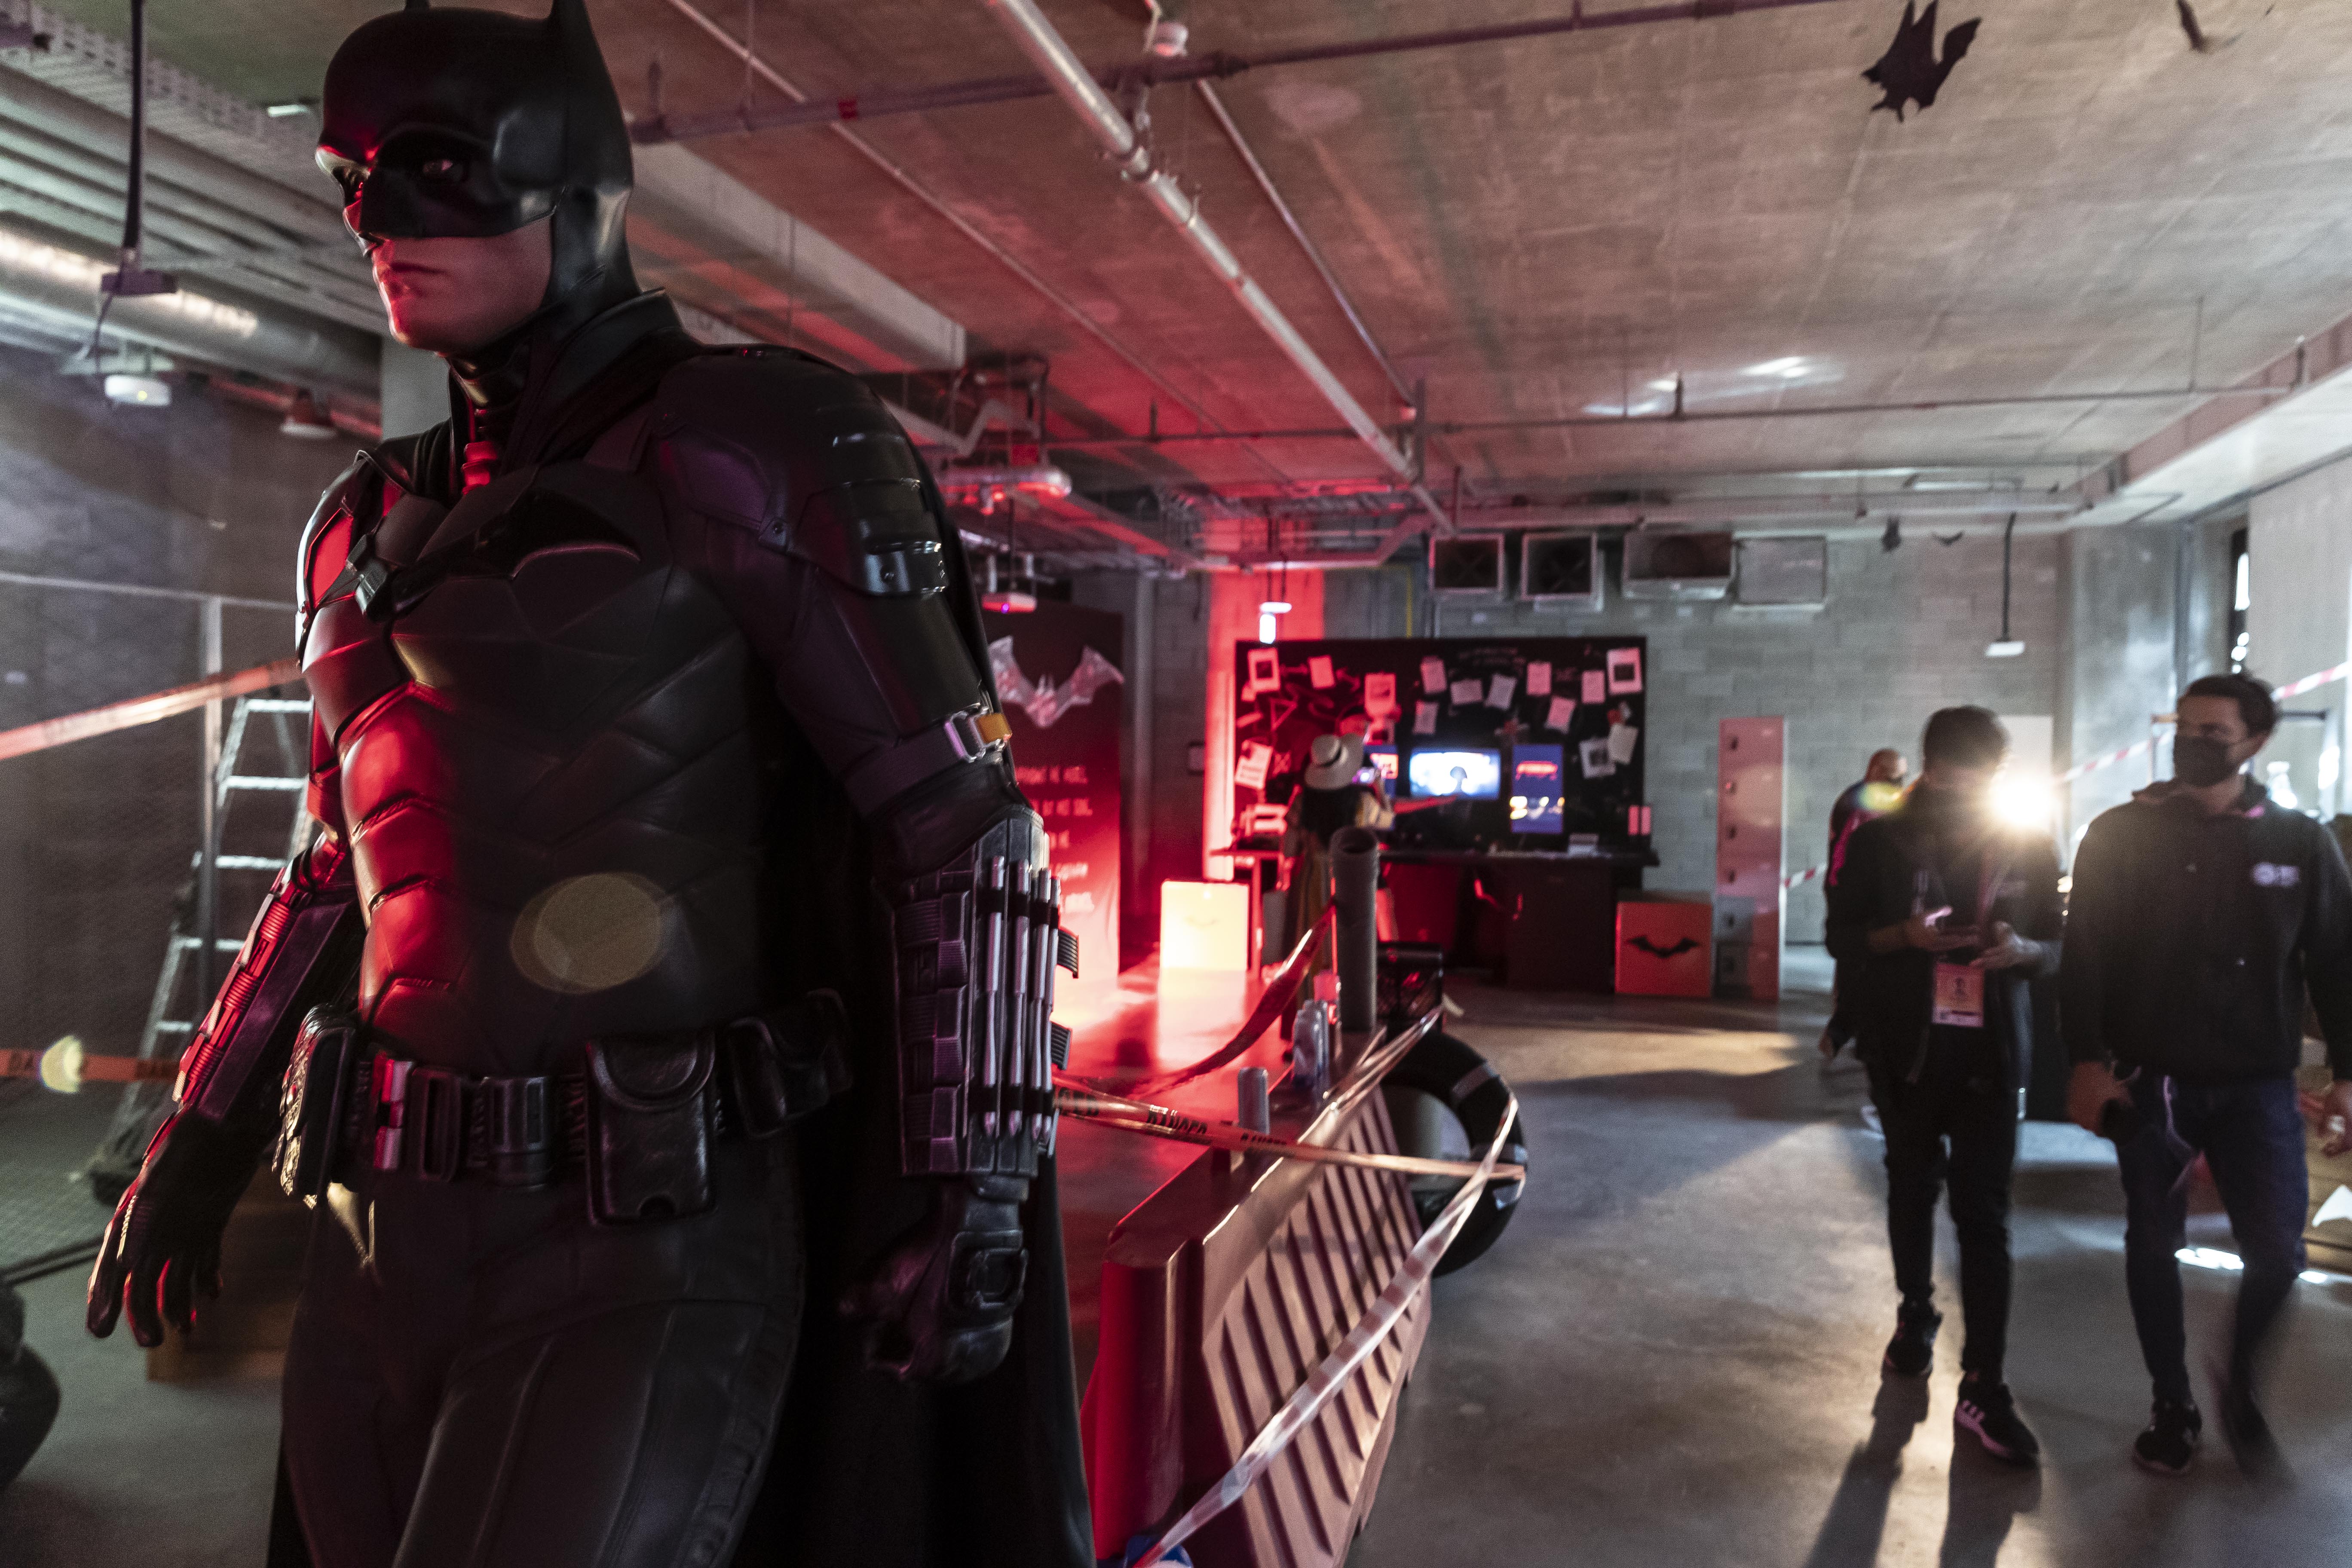 New Gotham City pavilion opens at Expo 2020 Dubai to celebrate release of  'The Batman'